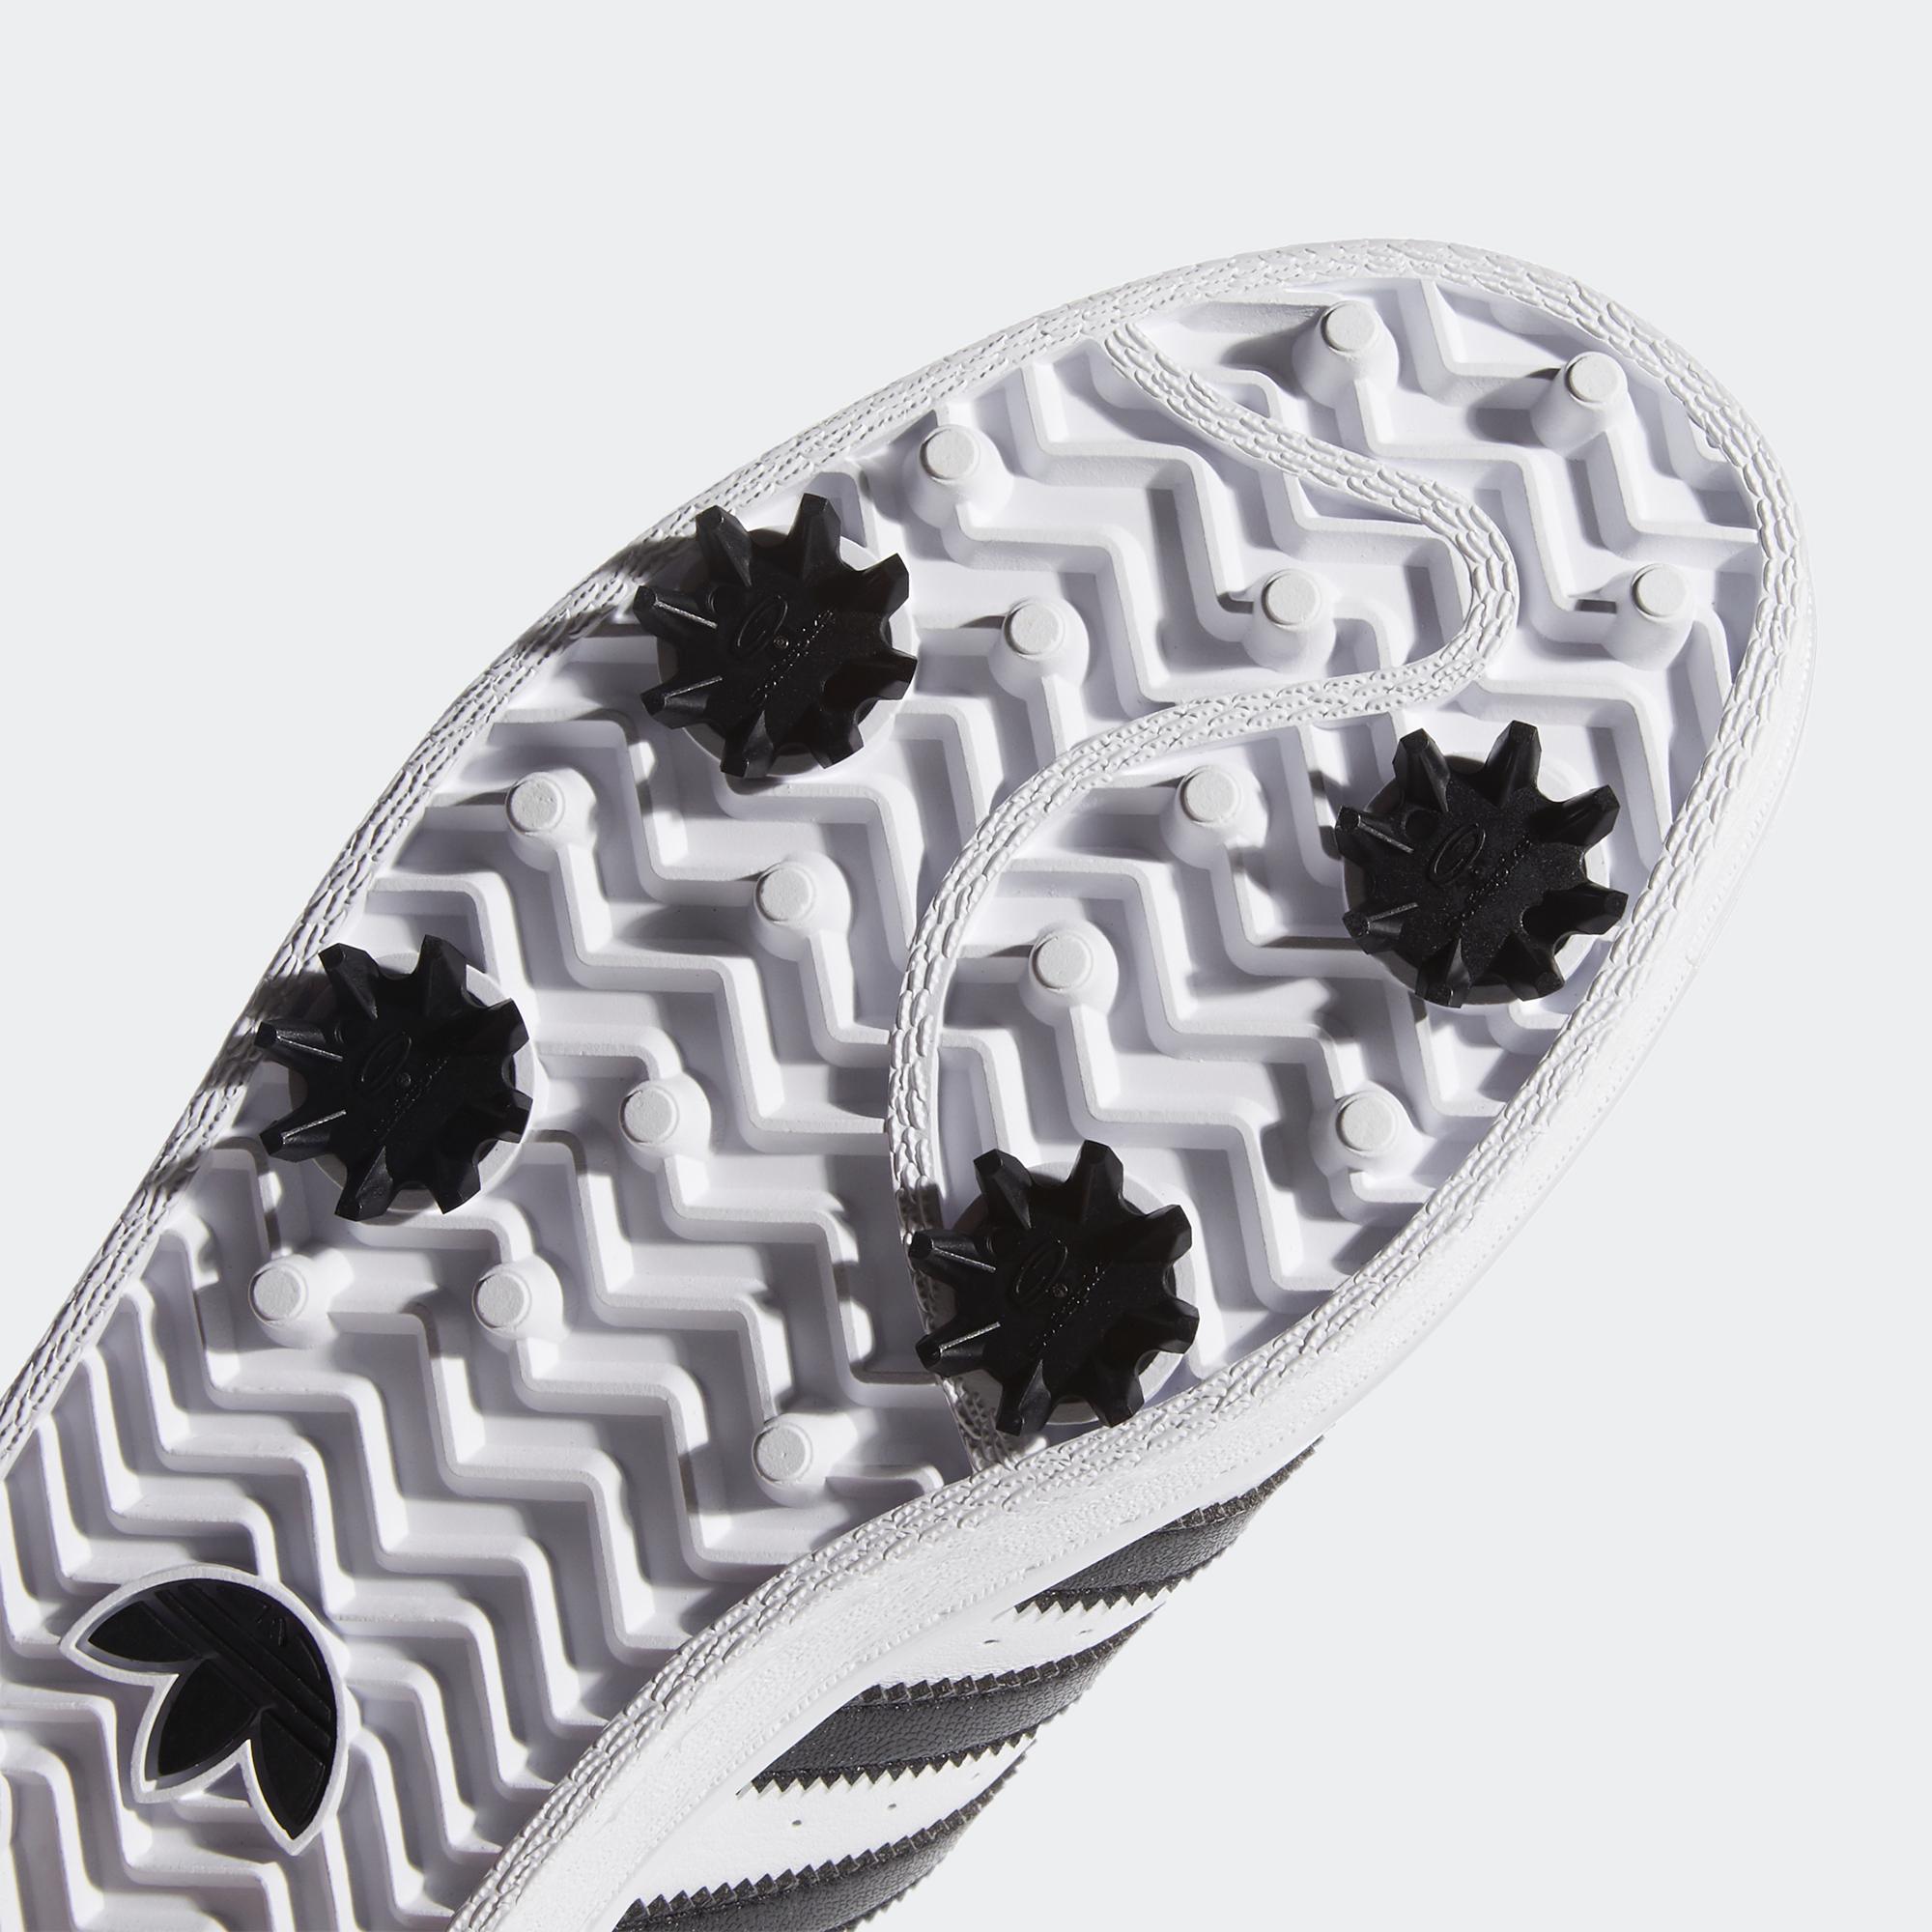 ADIDAS GOLF SUPERSTAR 運動鞋- 白色| 男子| adidas(愛迪達)香港官方網